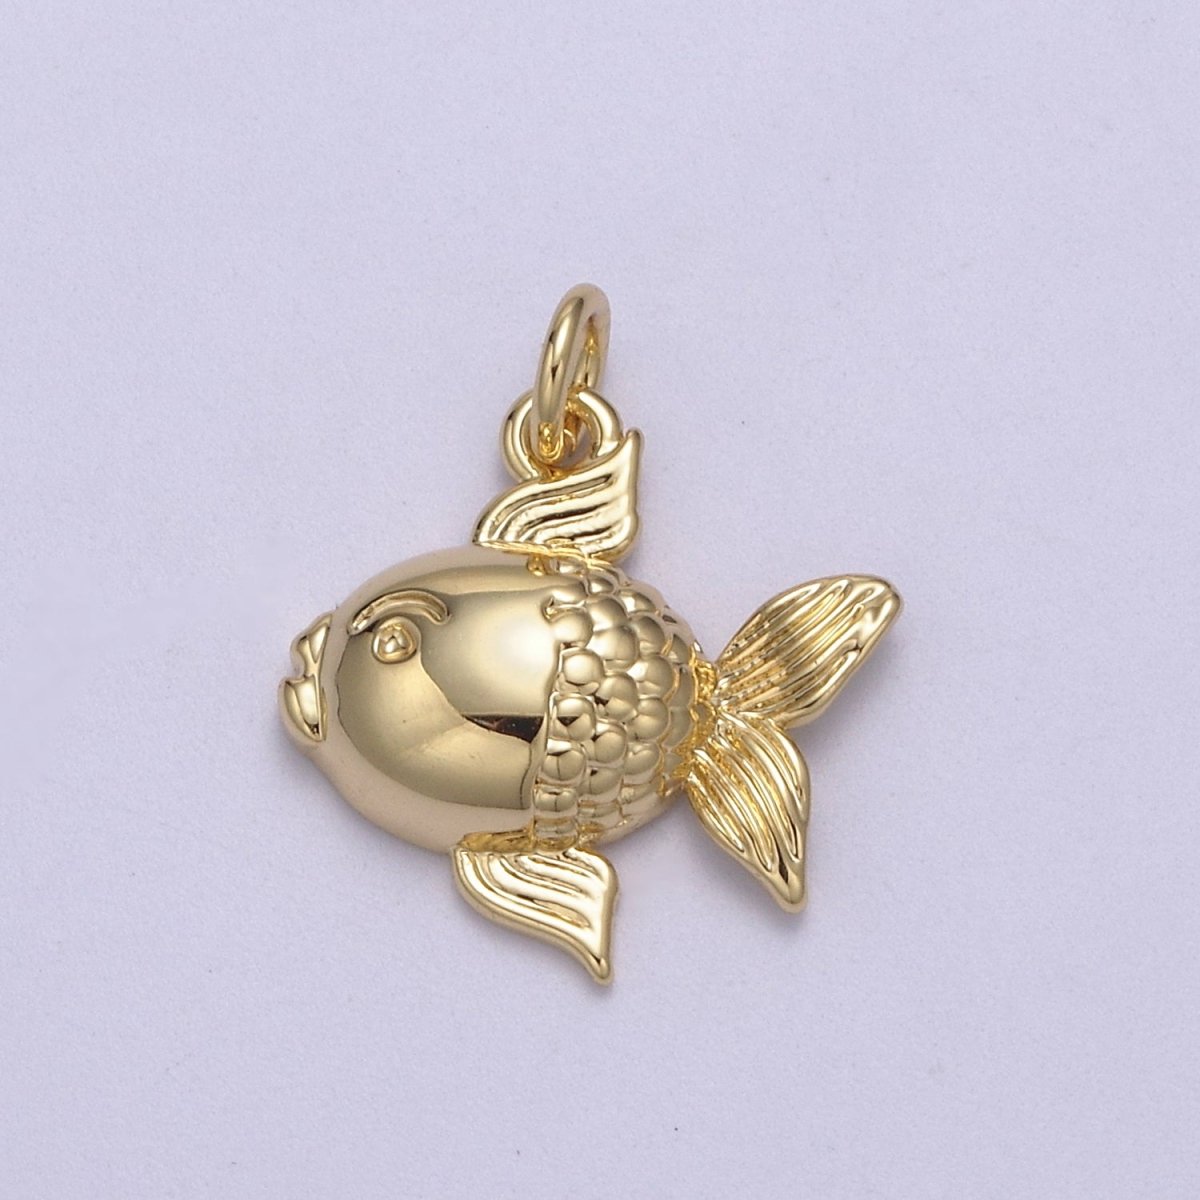 Dainty 14k Godl Filled Puffy Goldfish Pet Fish Charm Animal Pendant N-817 - DLUXCA